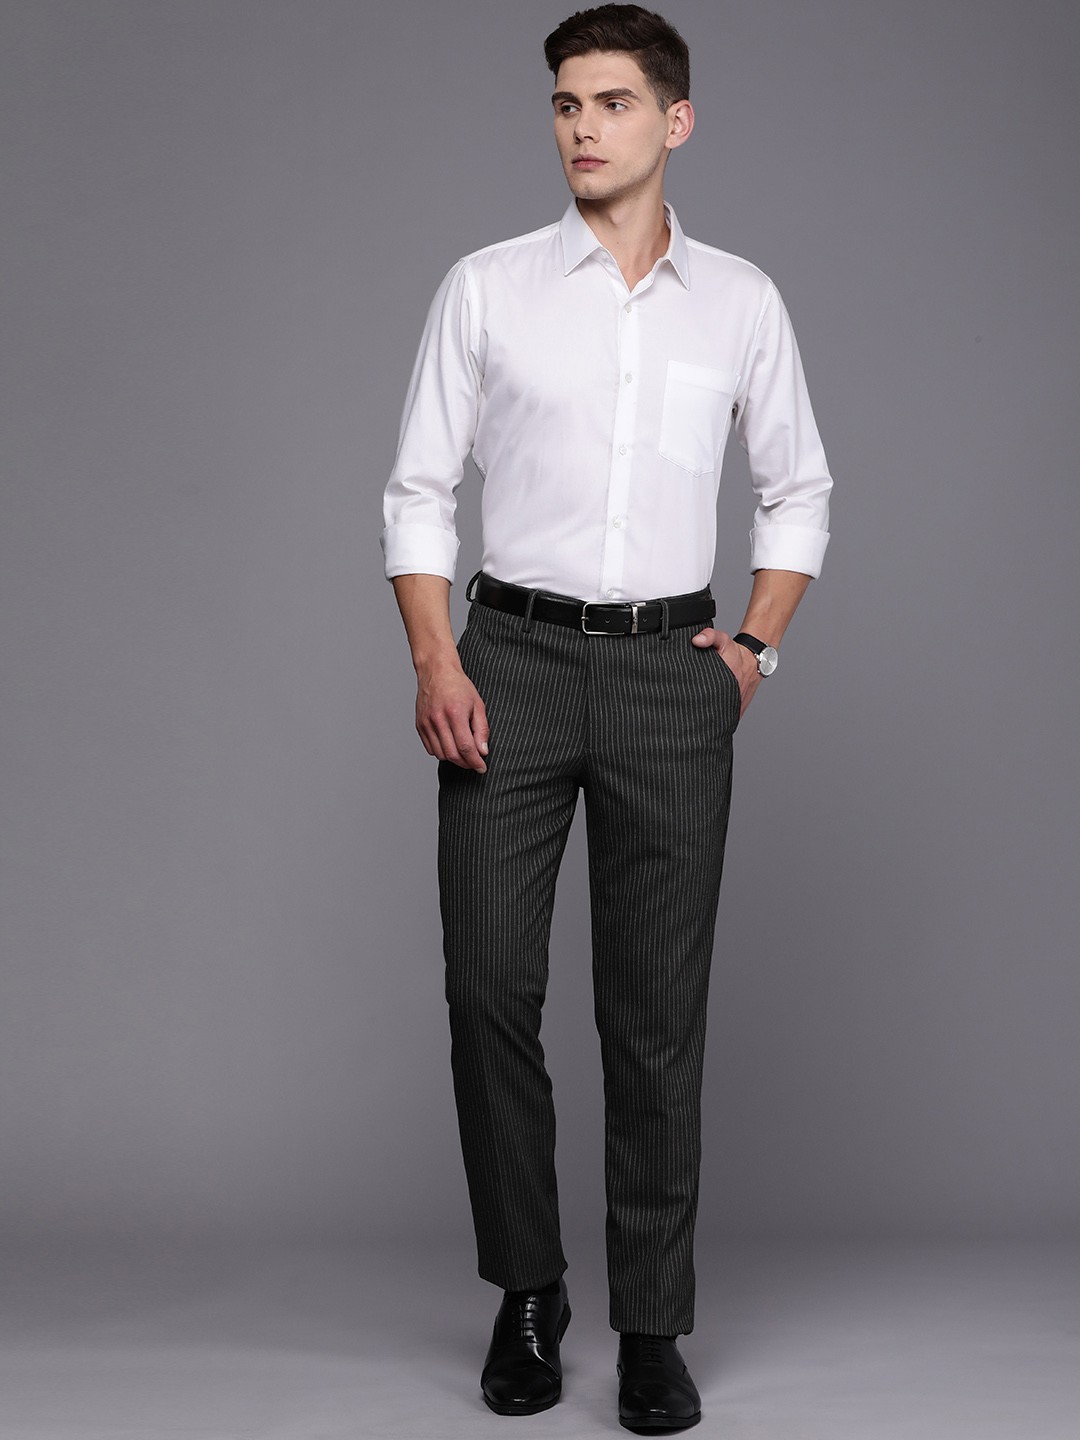 Park Avenue Striped Grey Pant White Shirt Combination